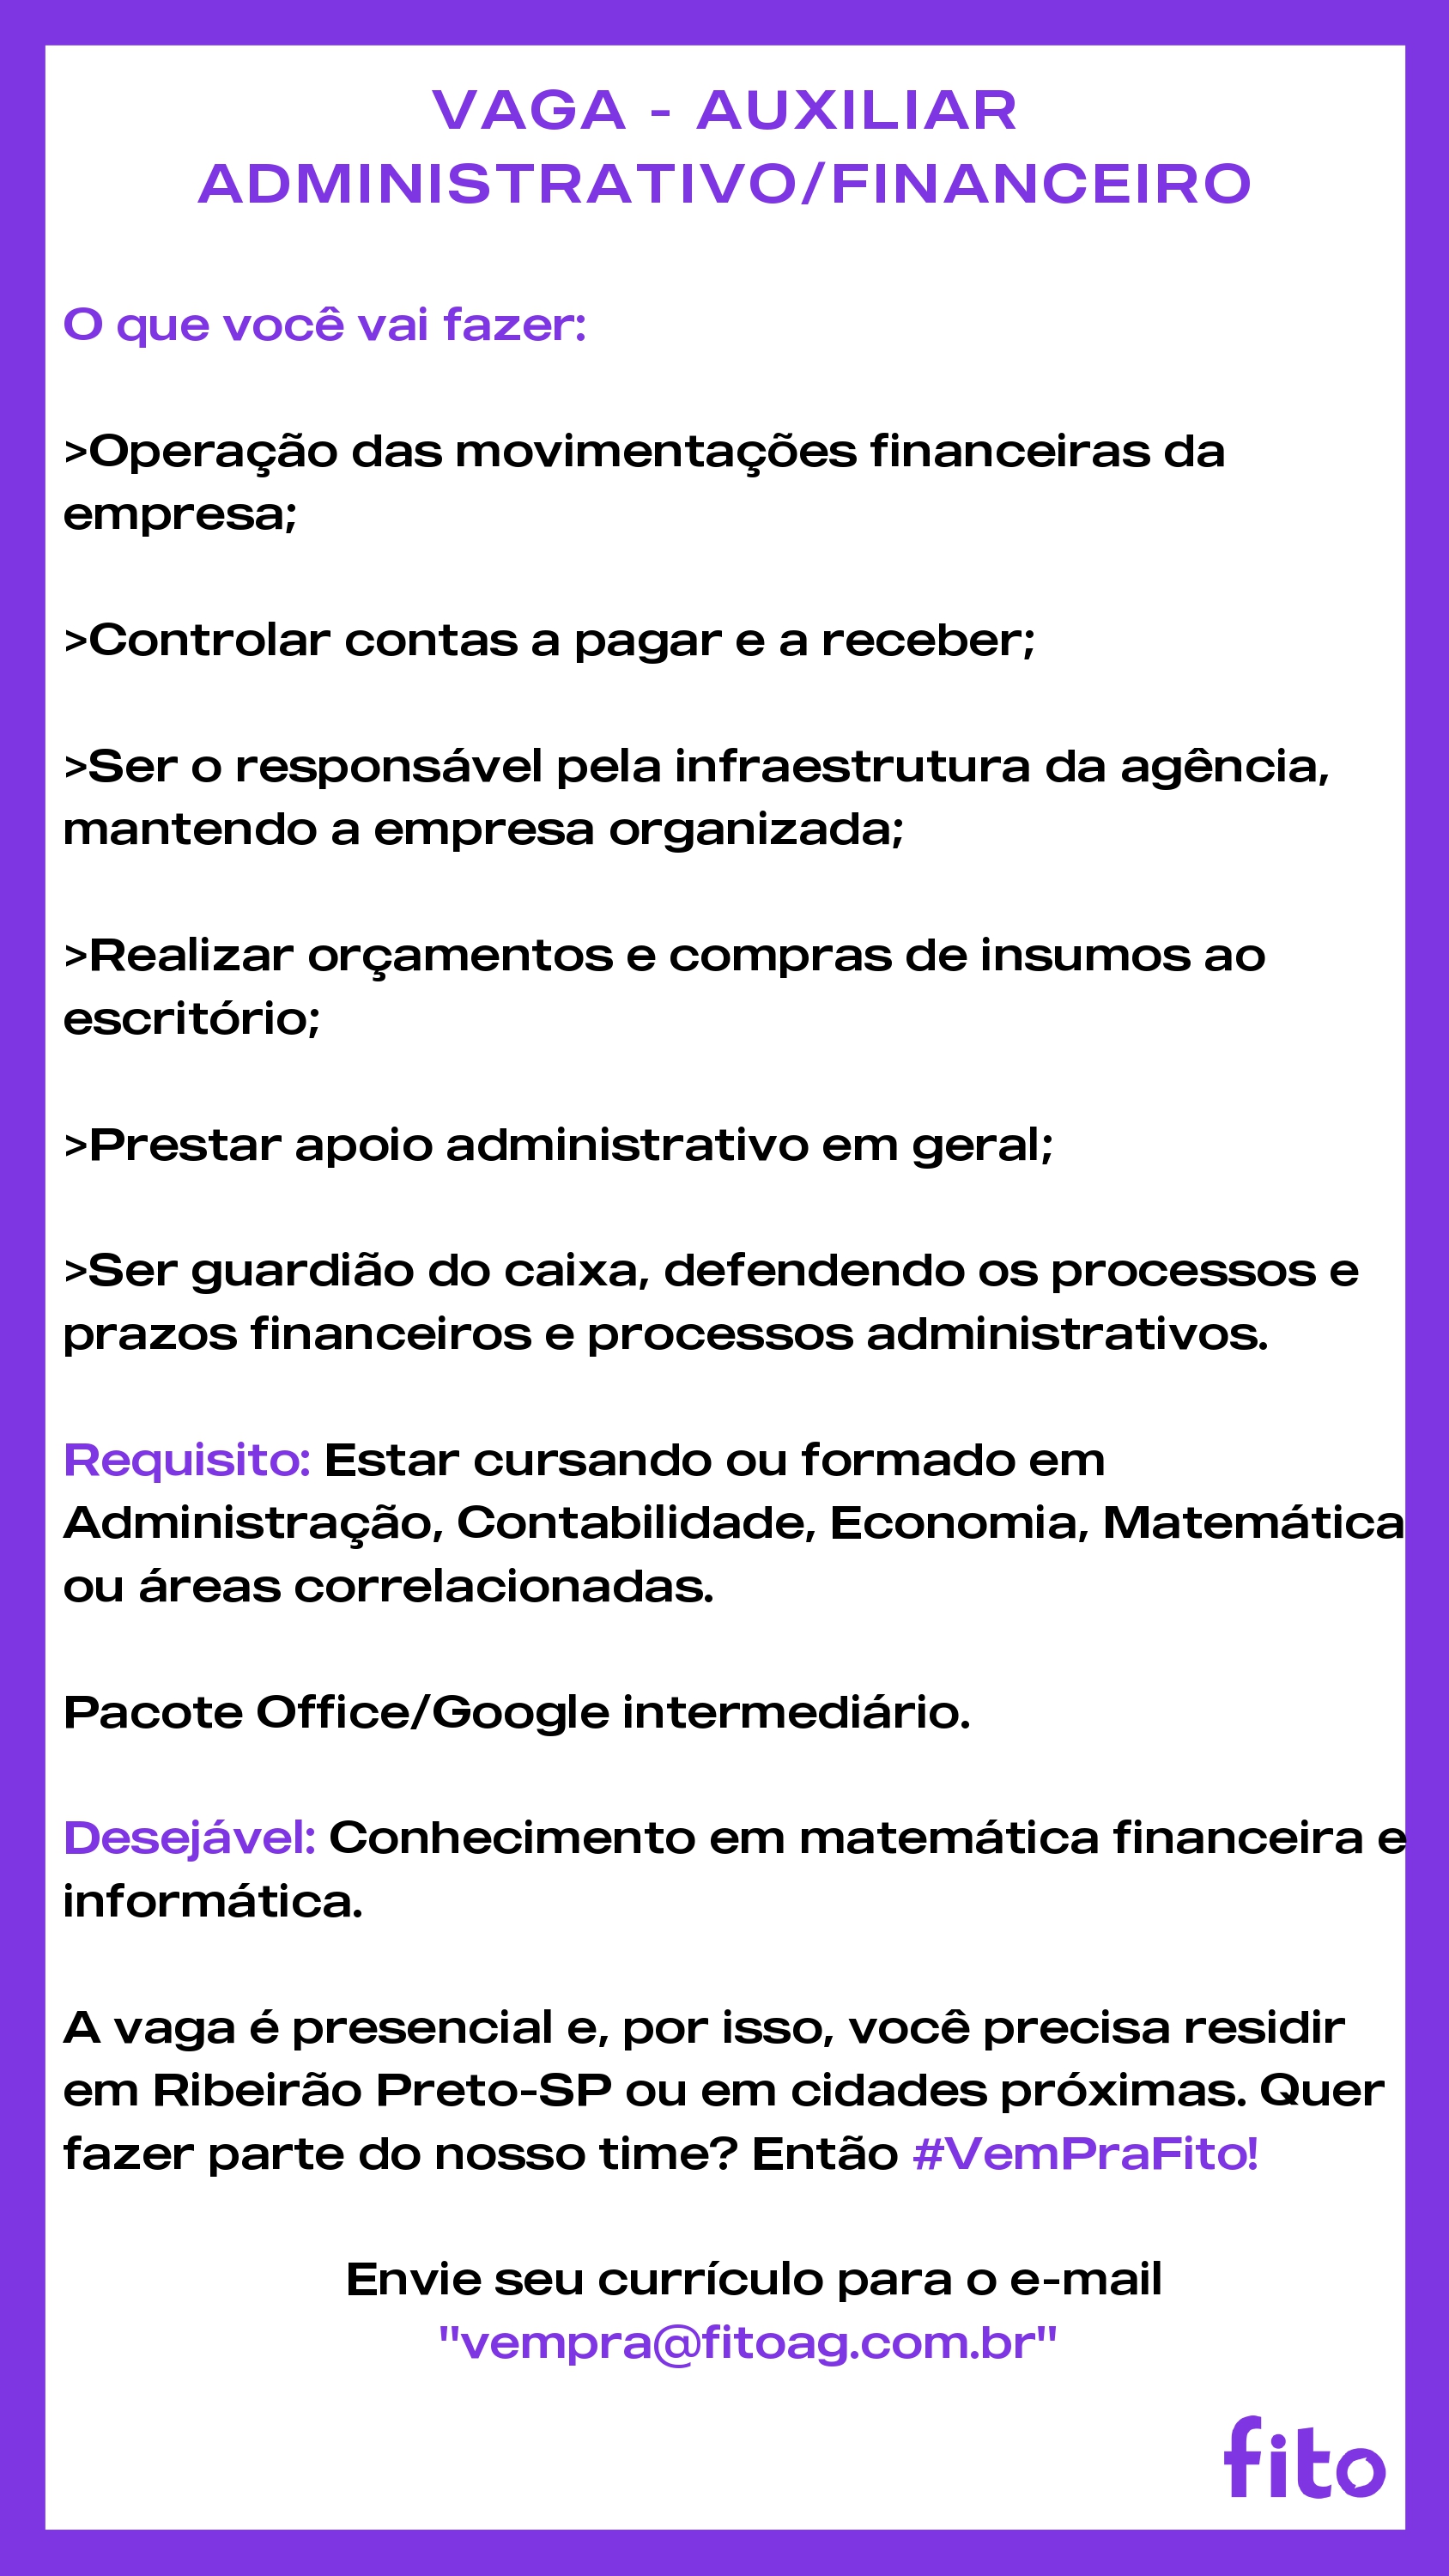 Fito_-_Vaga_Auxiliar_Administrativo_Financeiro_page-0001.jpg